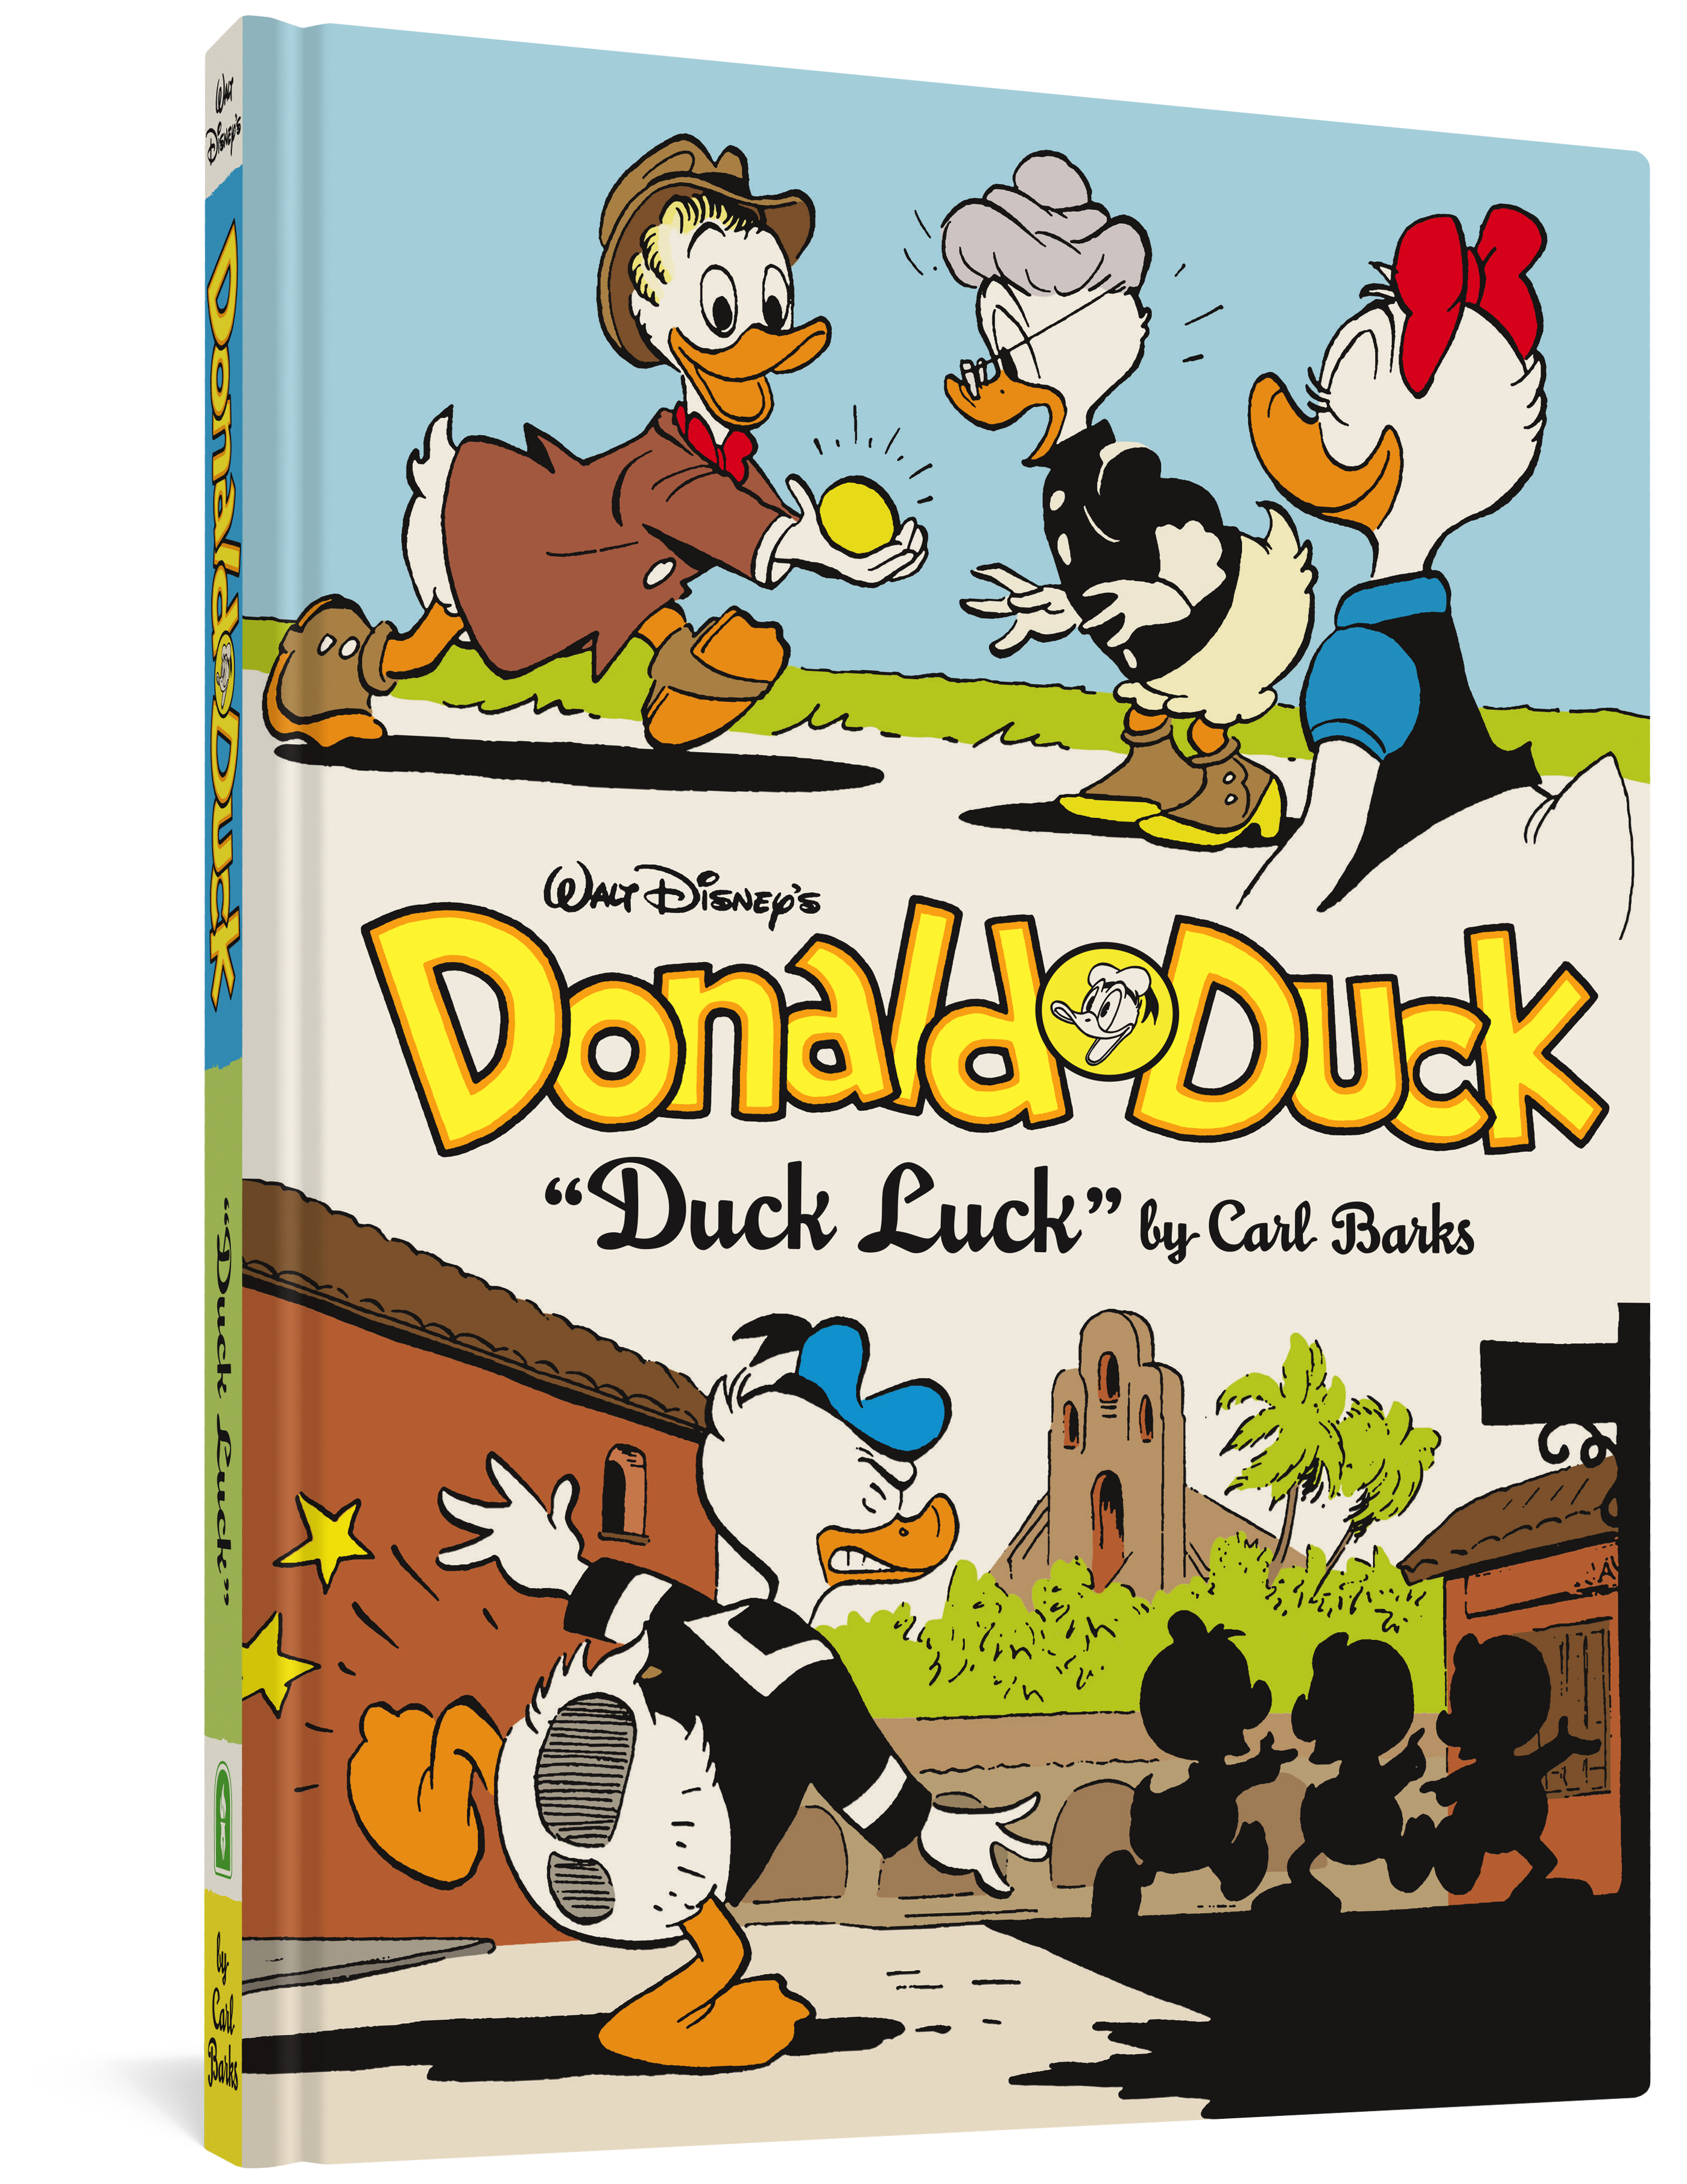 Complete Carl Barks Disney Library Hardcover Volume 27 Walt Disney's Donald Duck Duck Luck